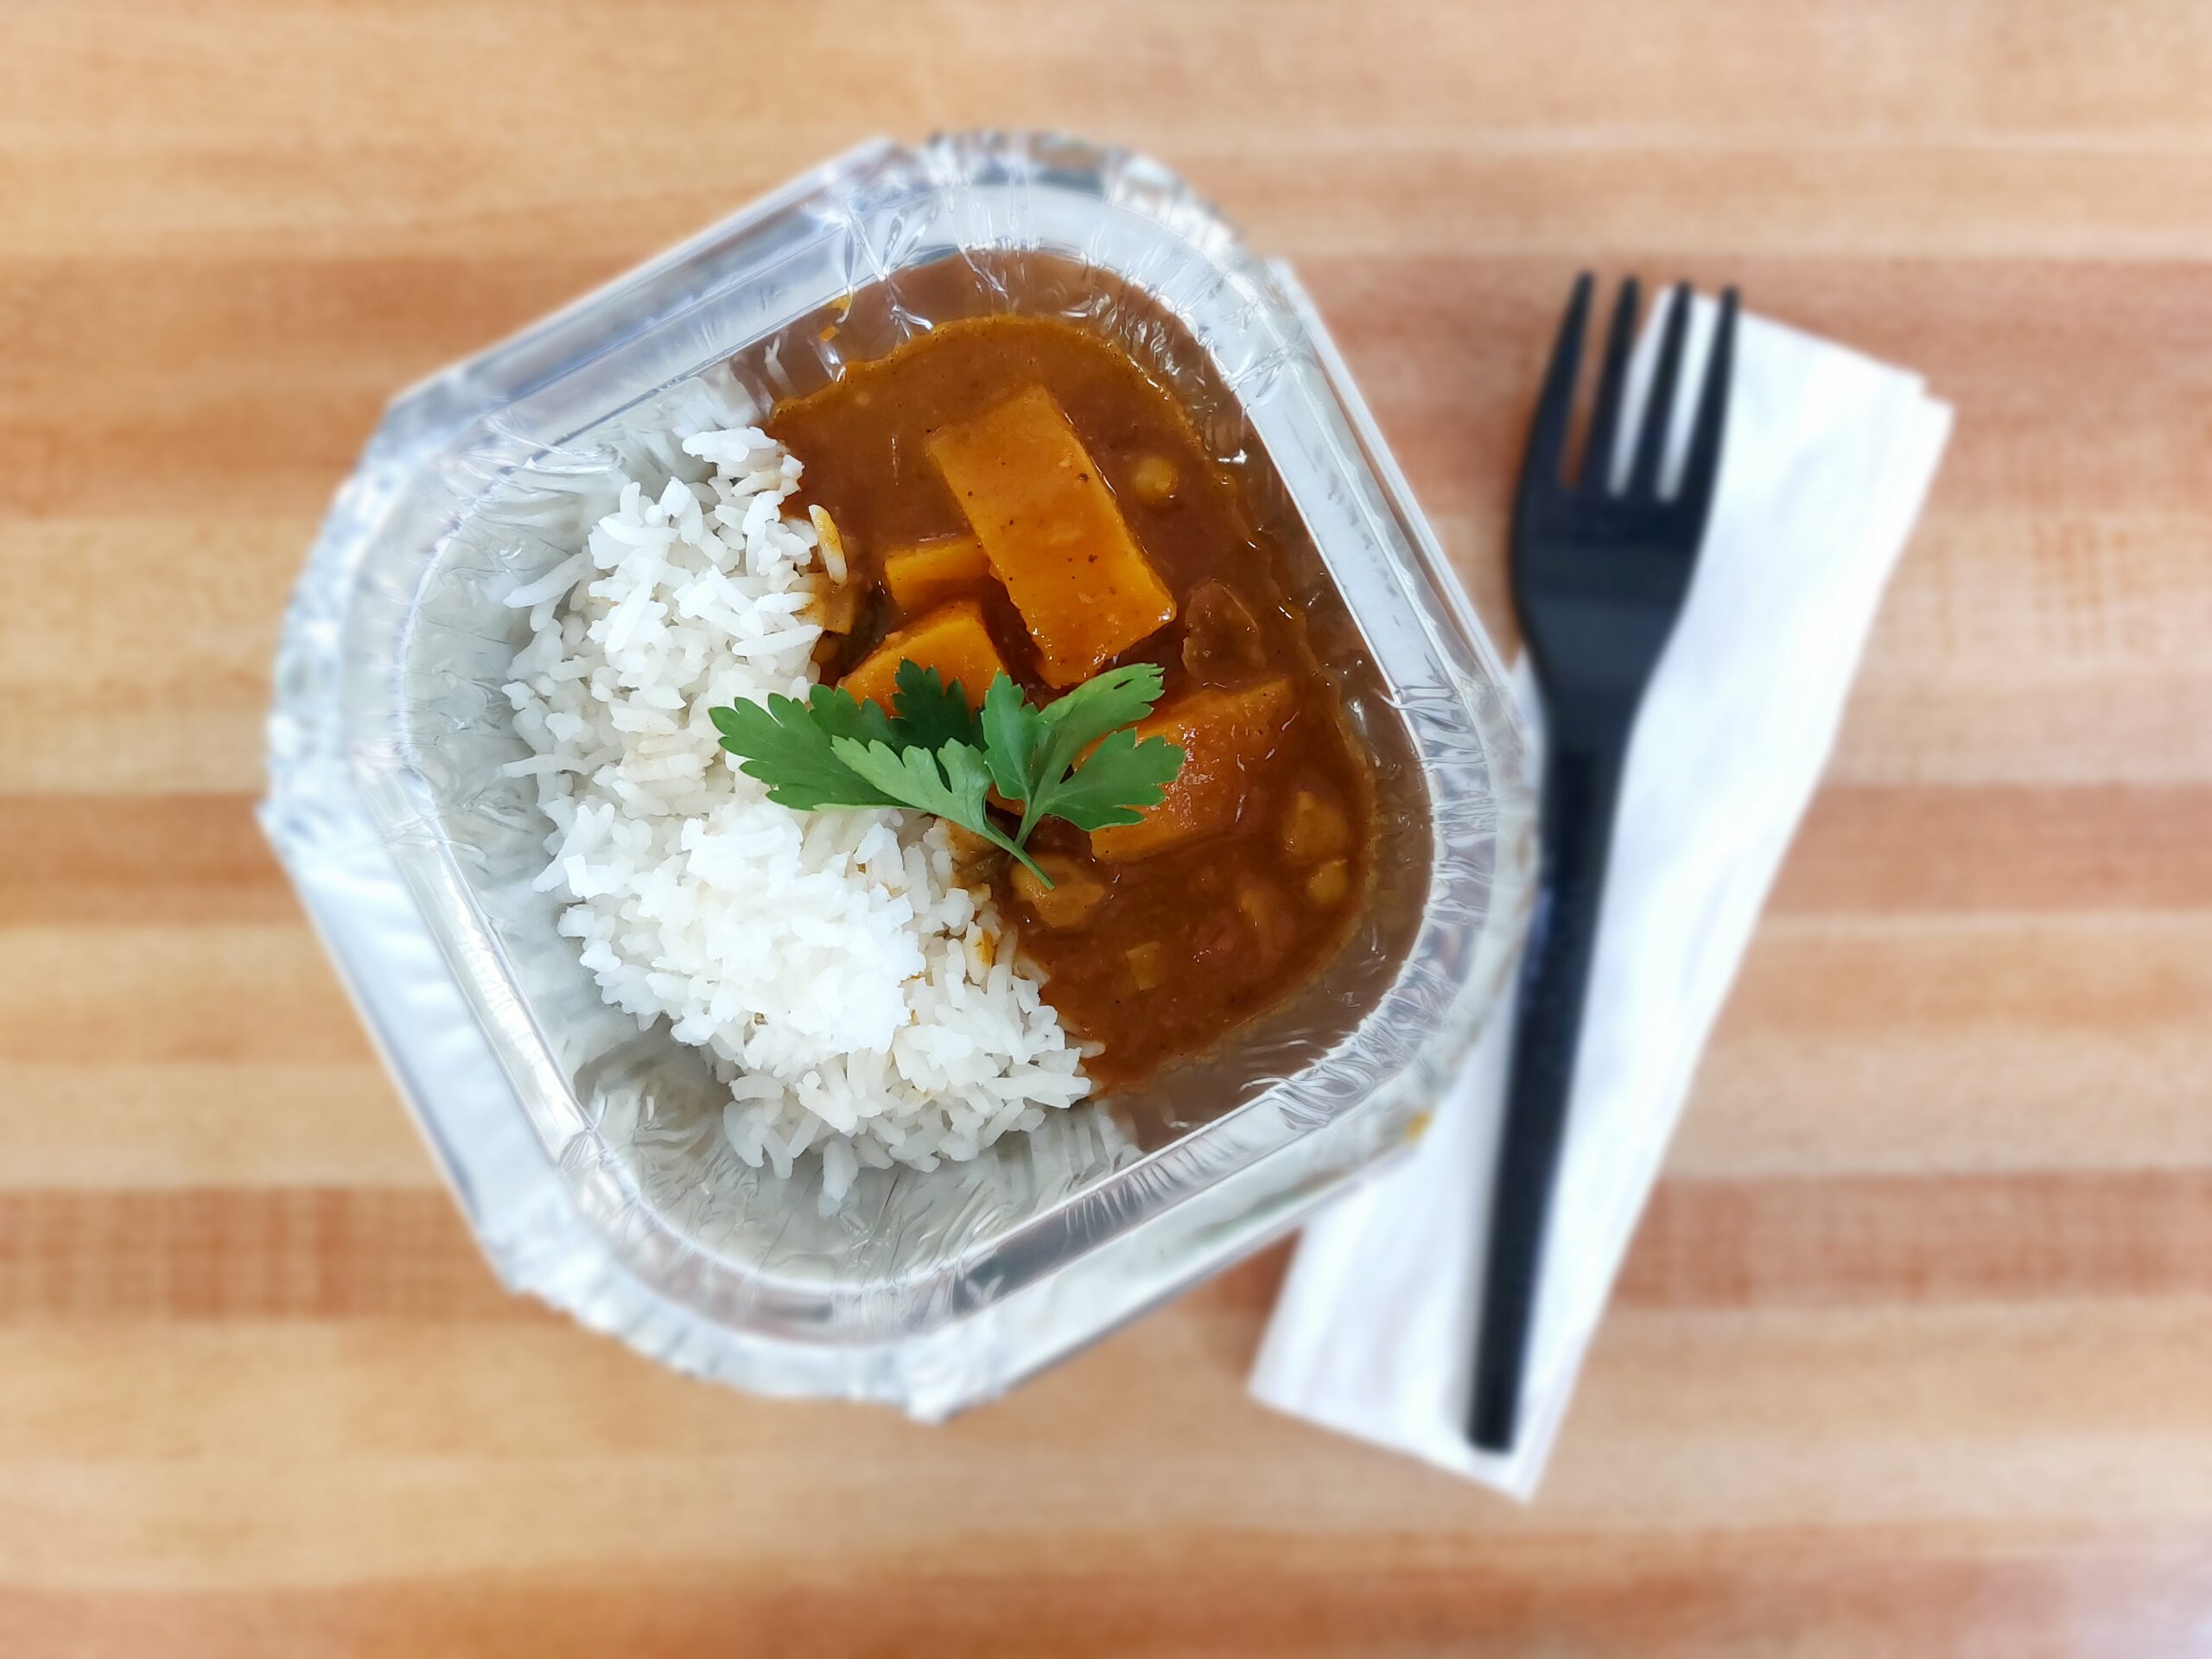 Chickpea & Sweet Potato Curry